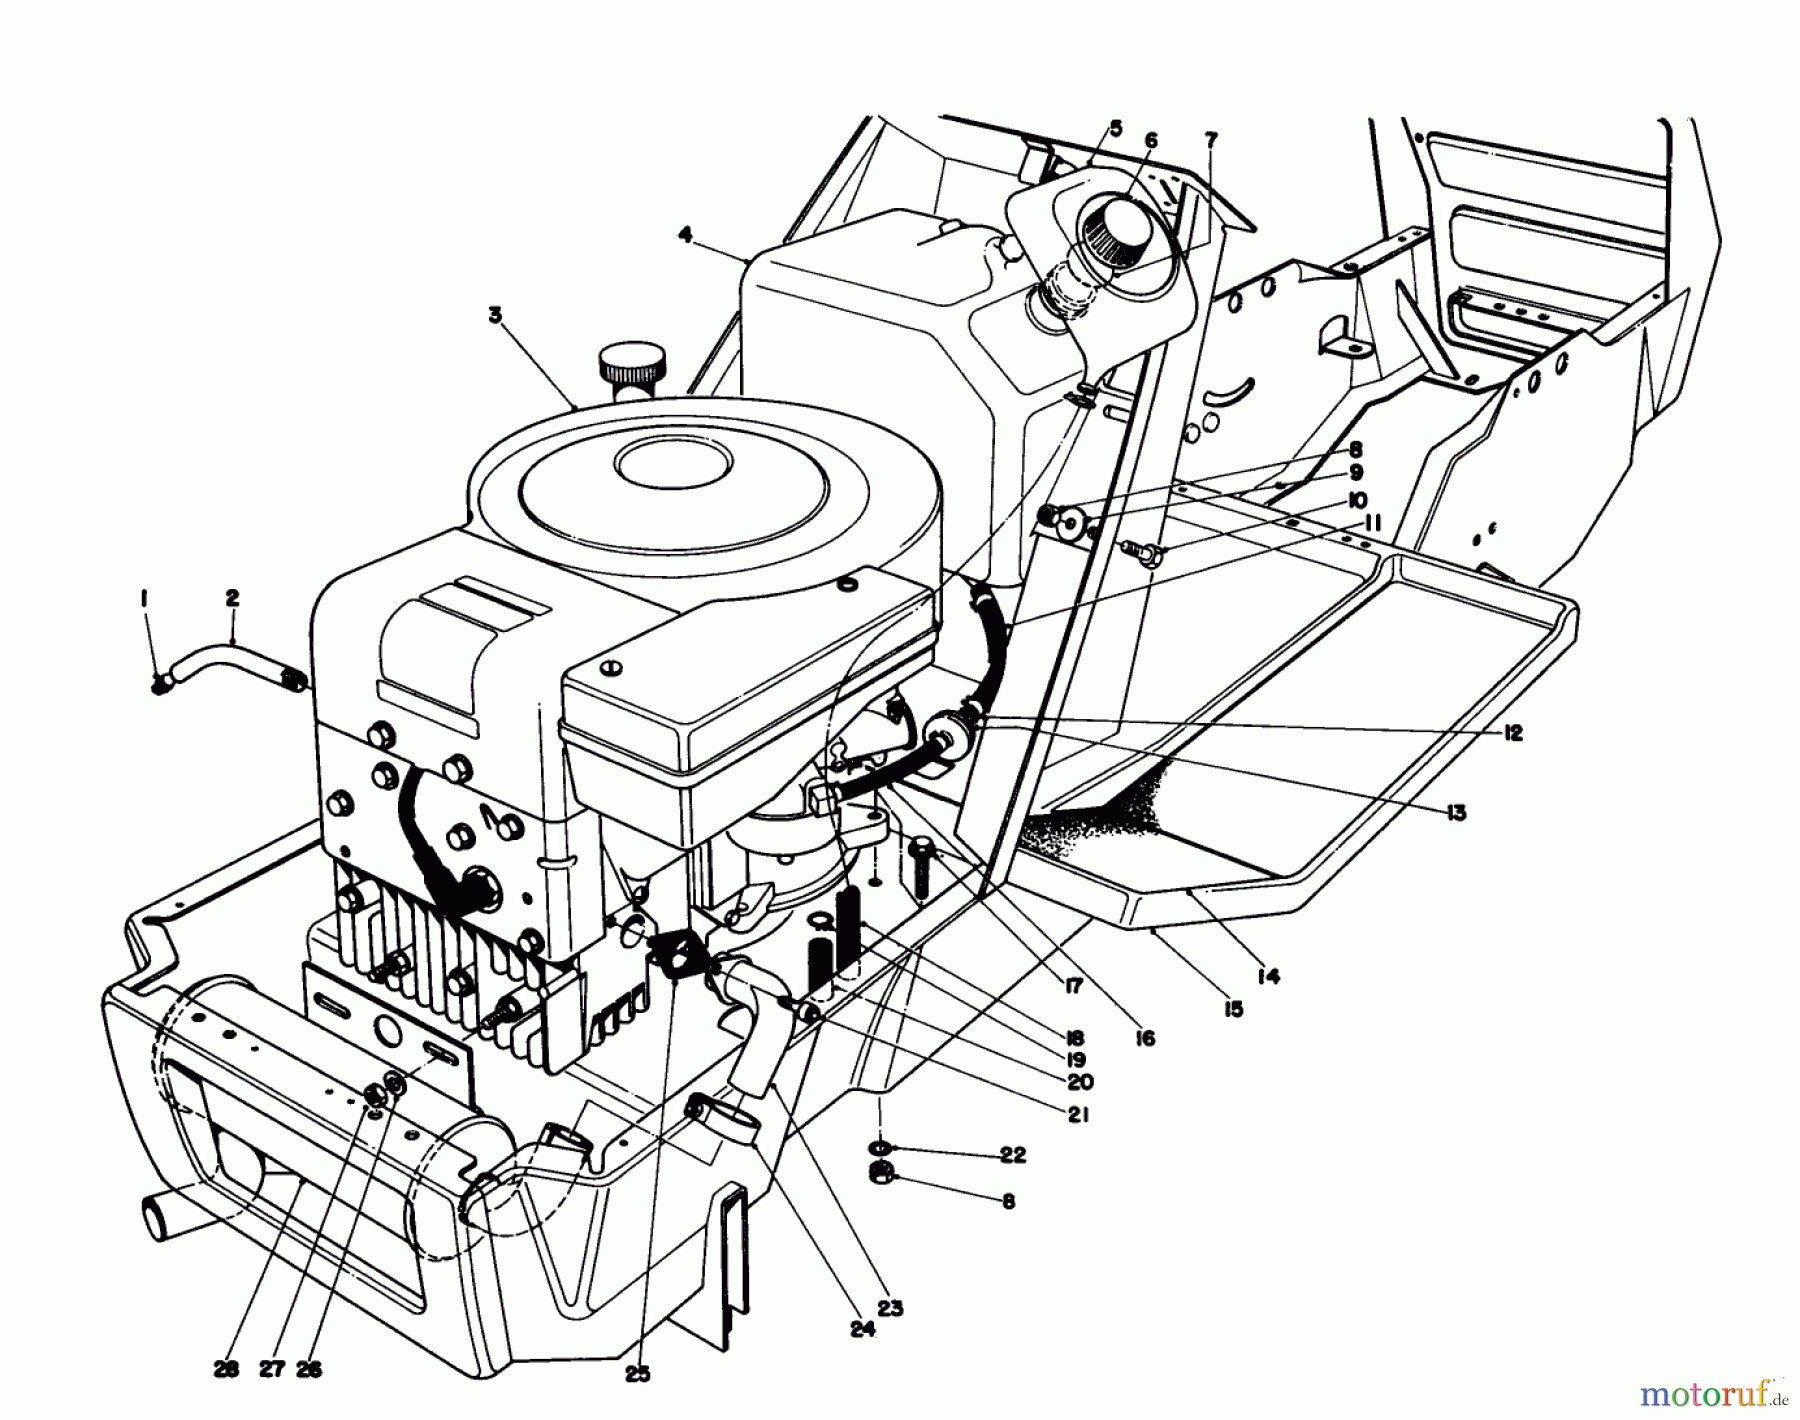  Toro Neu Mowers, Lawn & Garden Tractor Seite 1 57300 (8-32) - Toro 8-32 Front Engine Rider, 1984 (4000001-4999999) ENGINE ASSEMBLY MODEL 57300